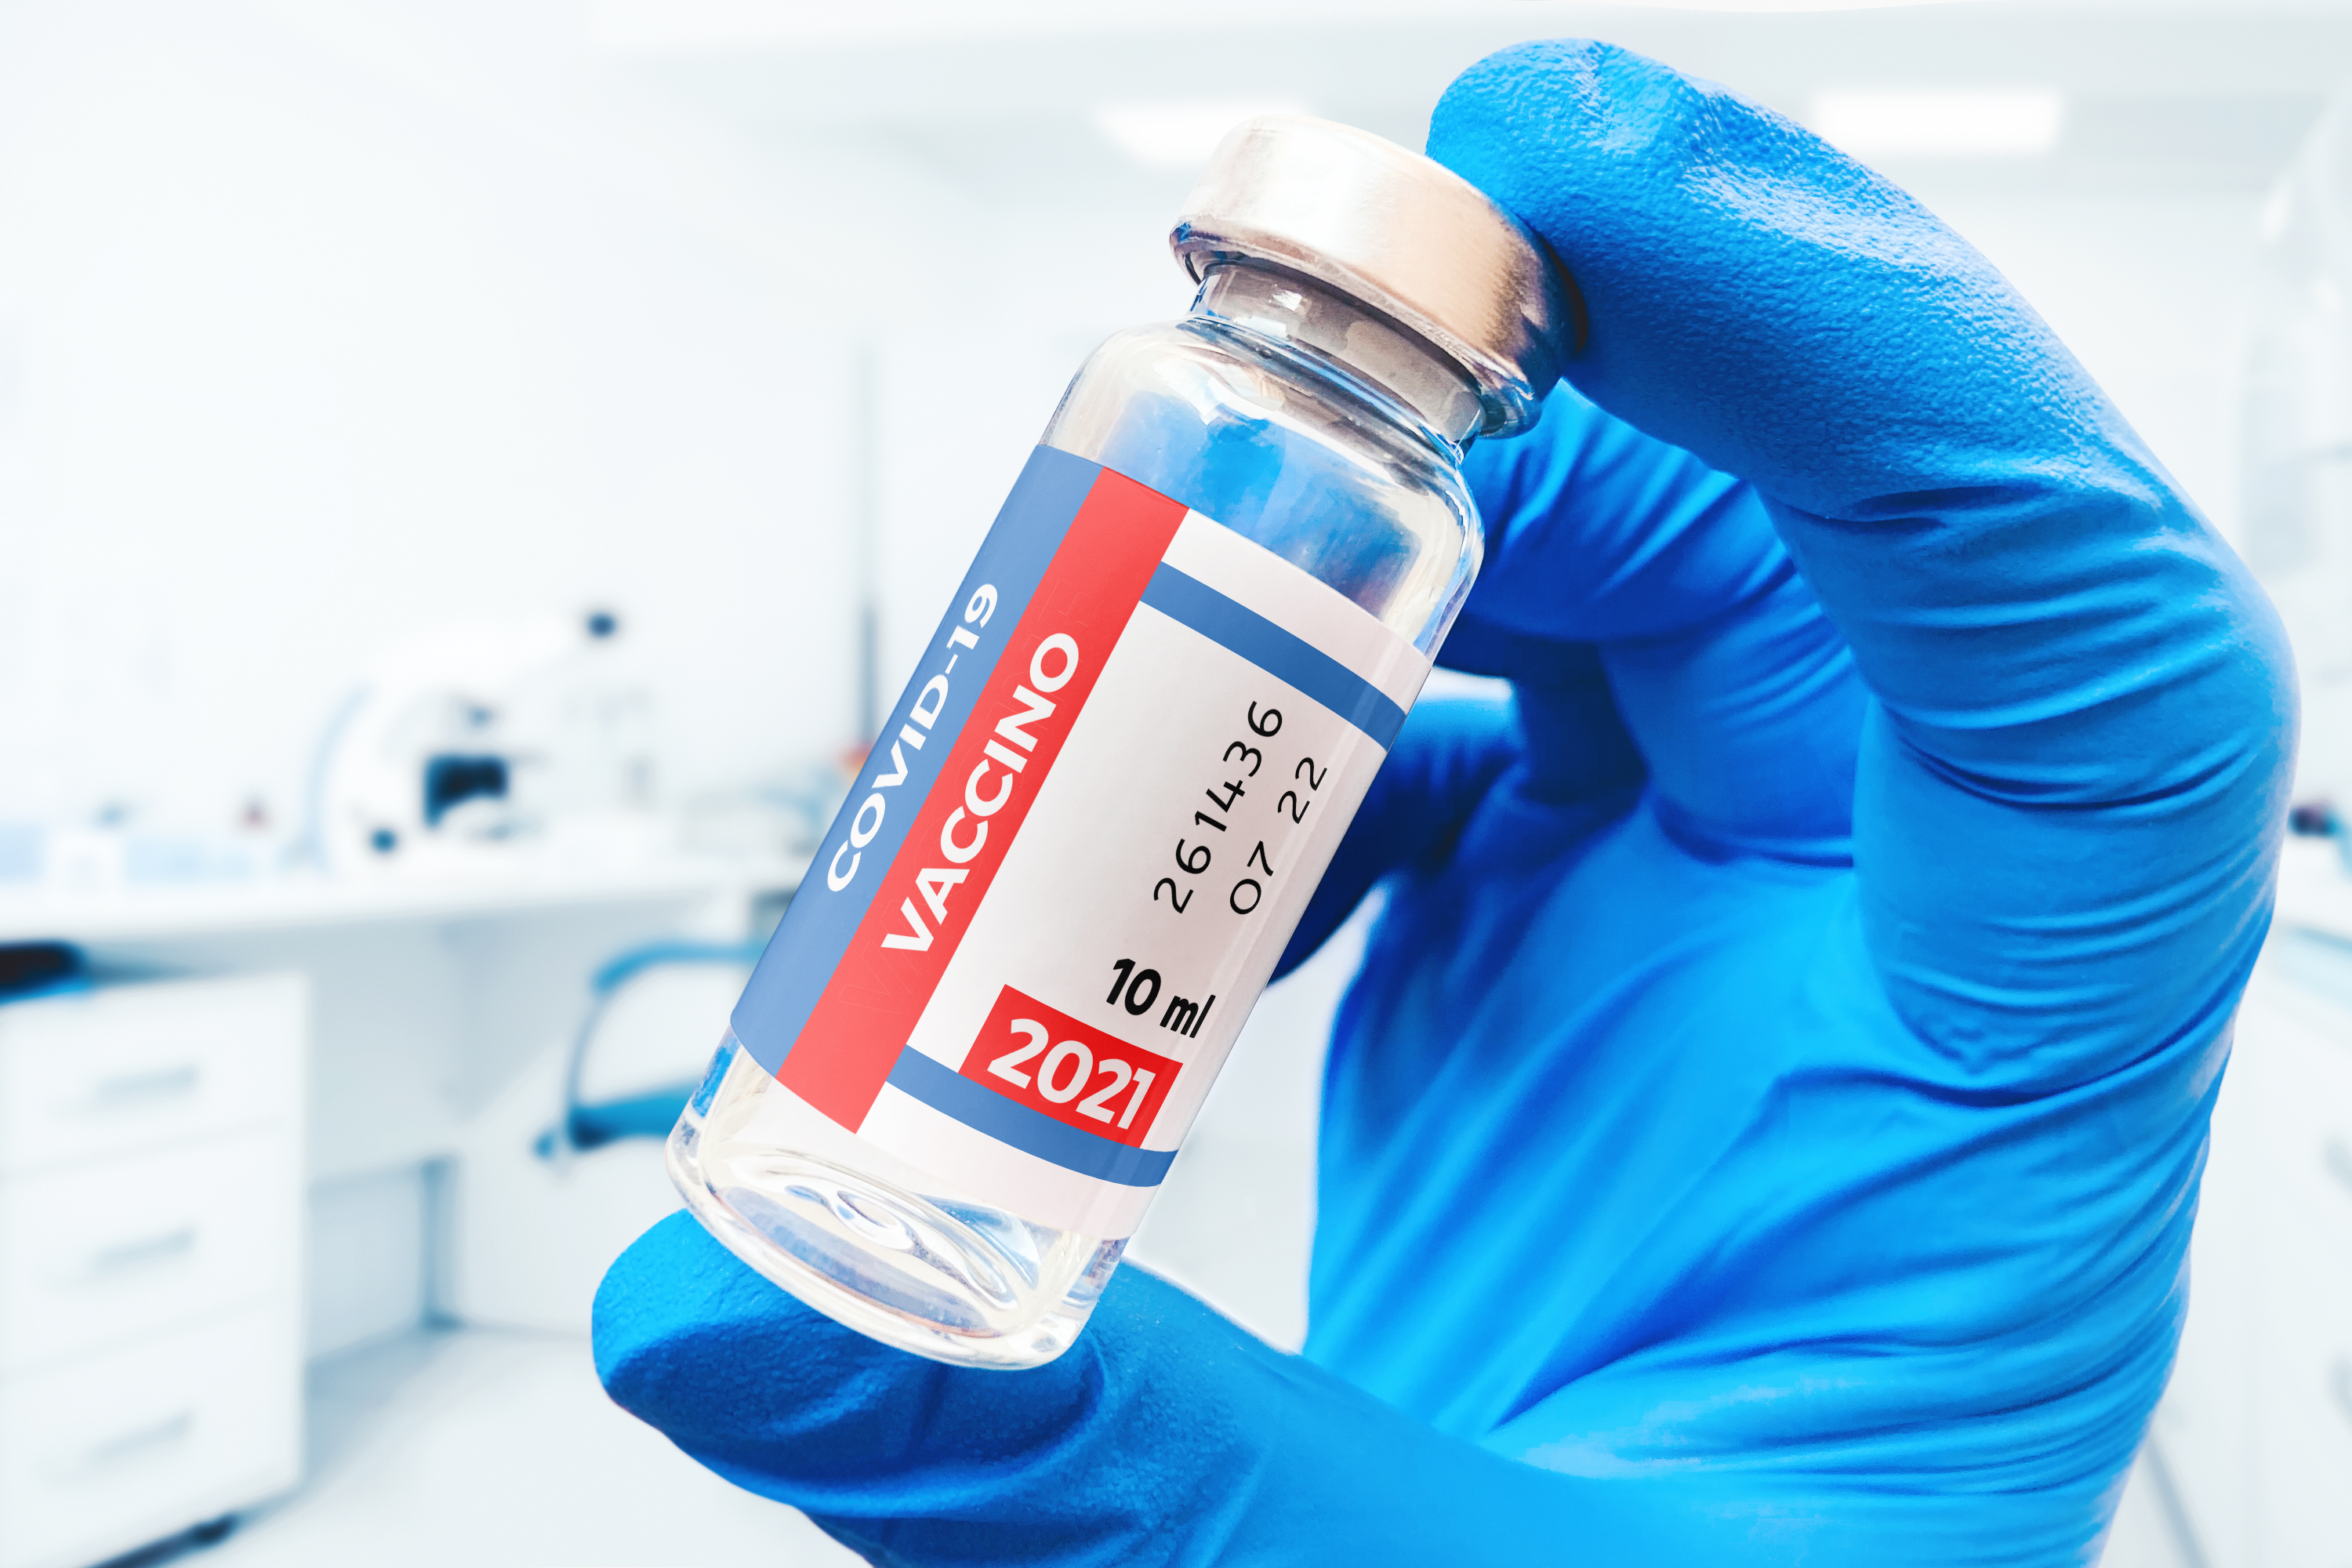 Novamax: Σε τι διαφέρει το νέο εμβόλιο κατά του κορωνοϊού από τα άλλα